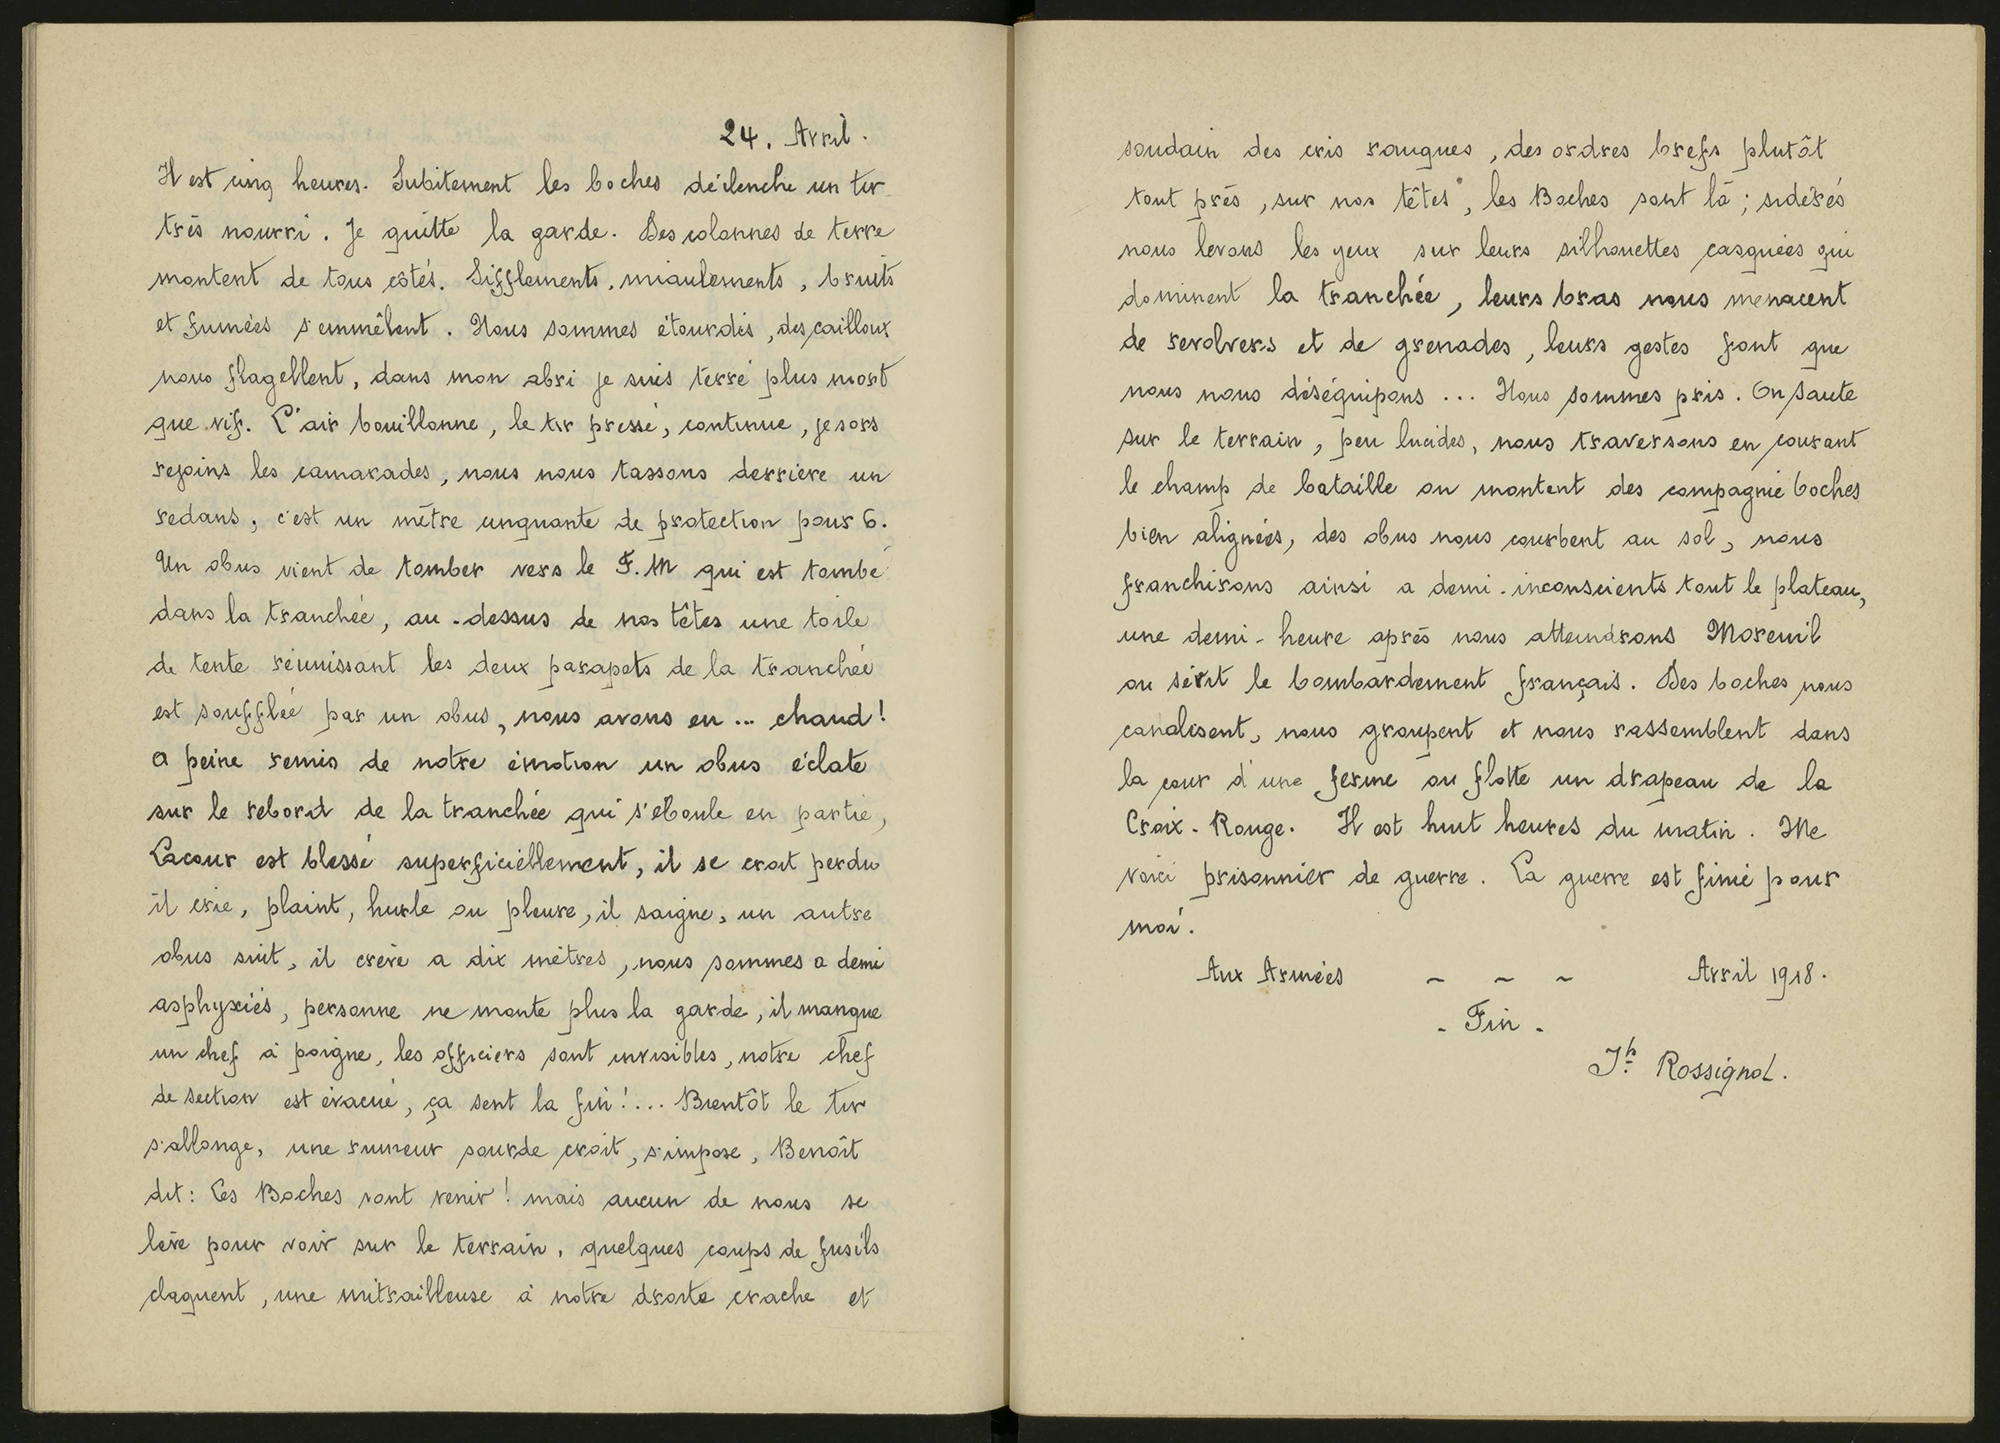 Carnet autobiographique du soldat Rossignol 24 avril 1918 - 1ii/593